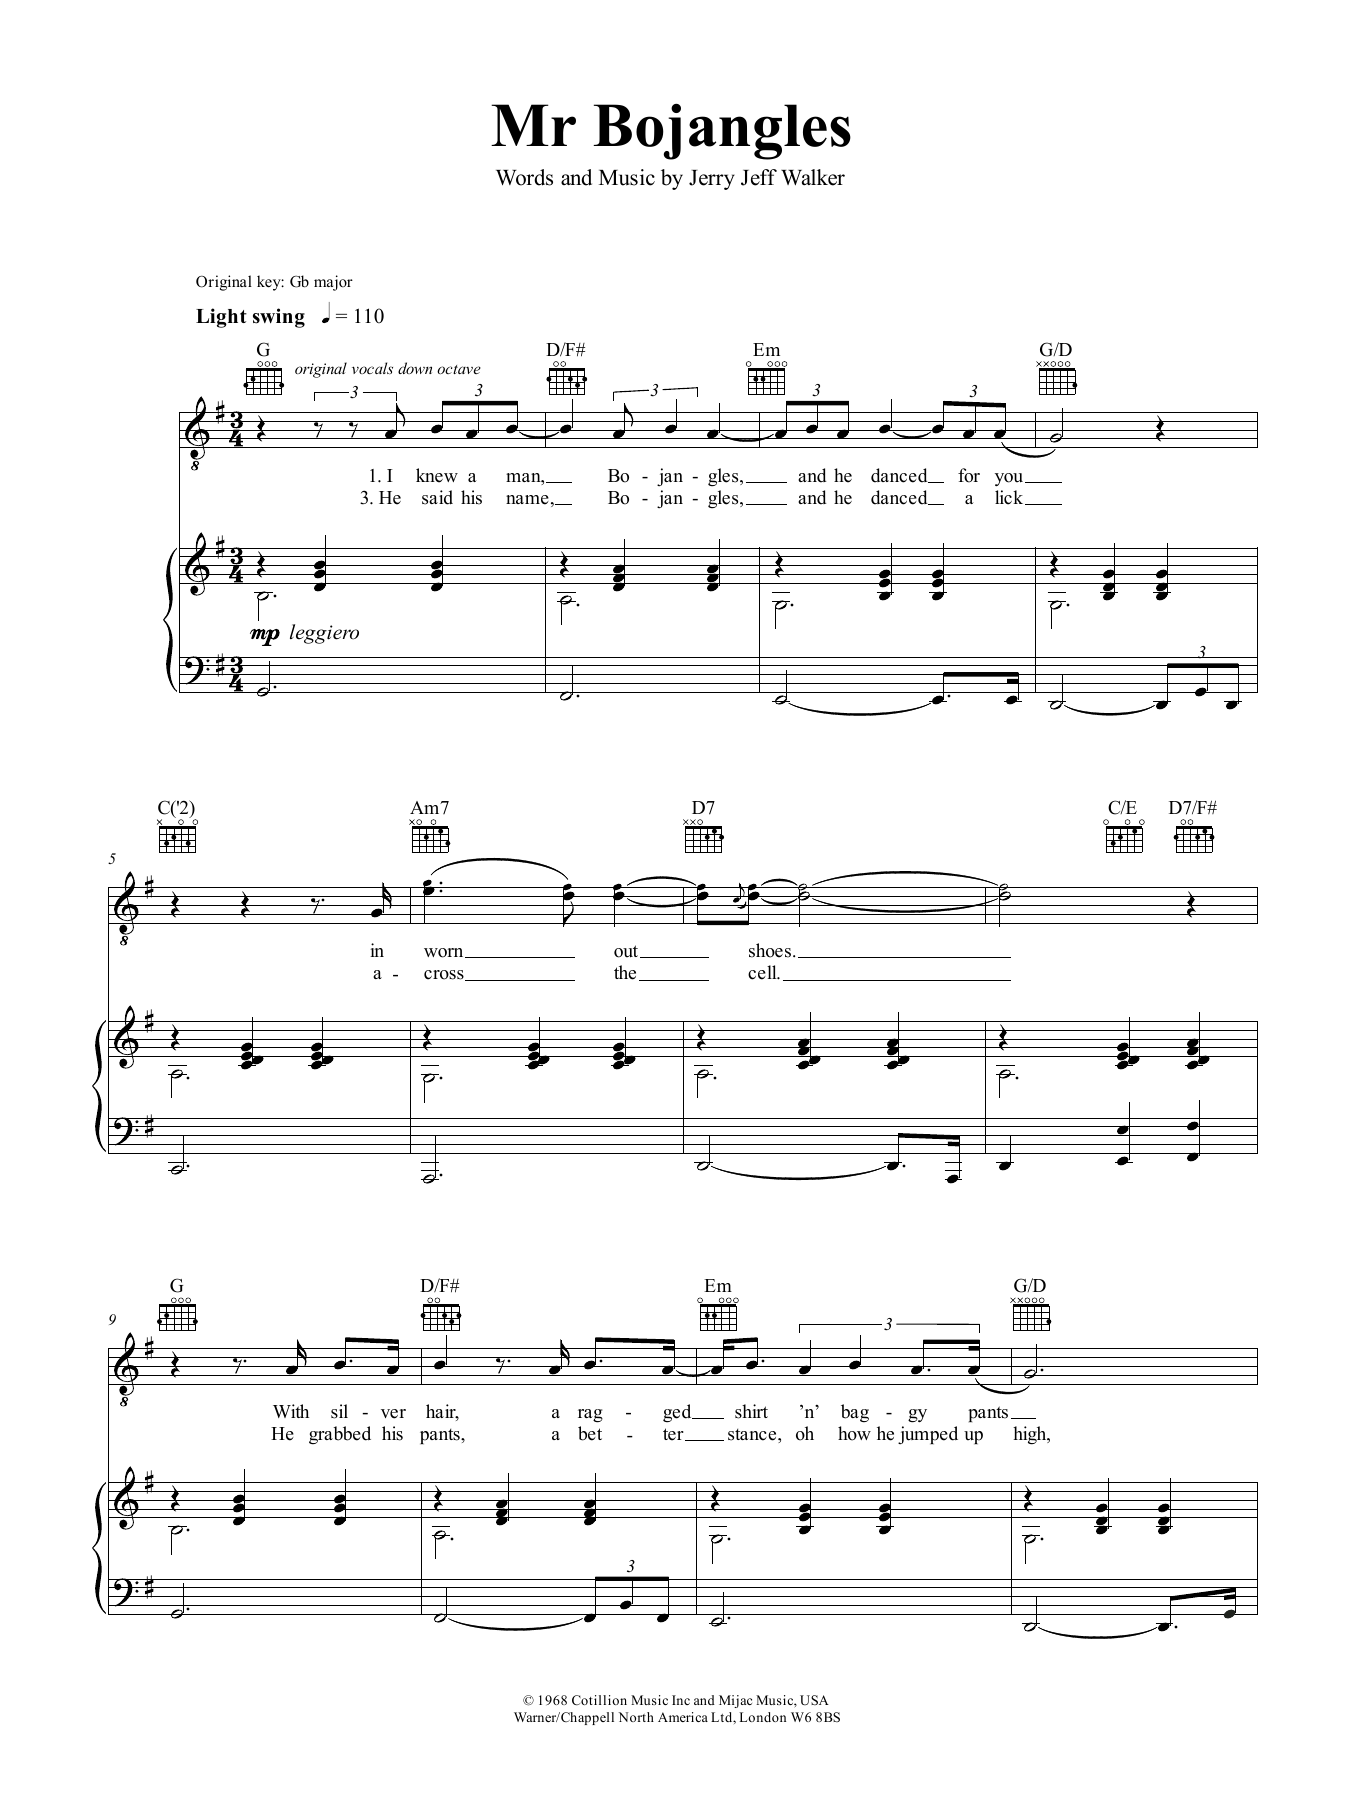 Nina Simone Mr Bojangles Sheet Music Notes & Chords for Piano, Vocal & Guitar (Right-Hand Melody) - Download or Print PDF